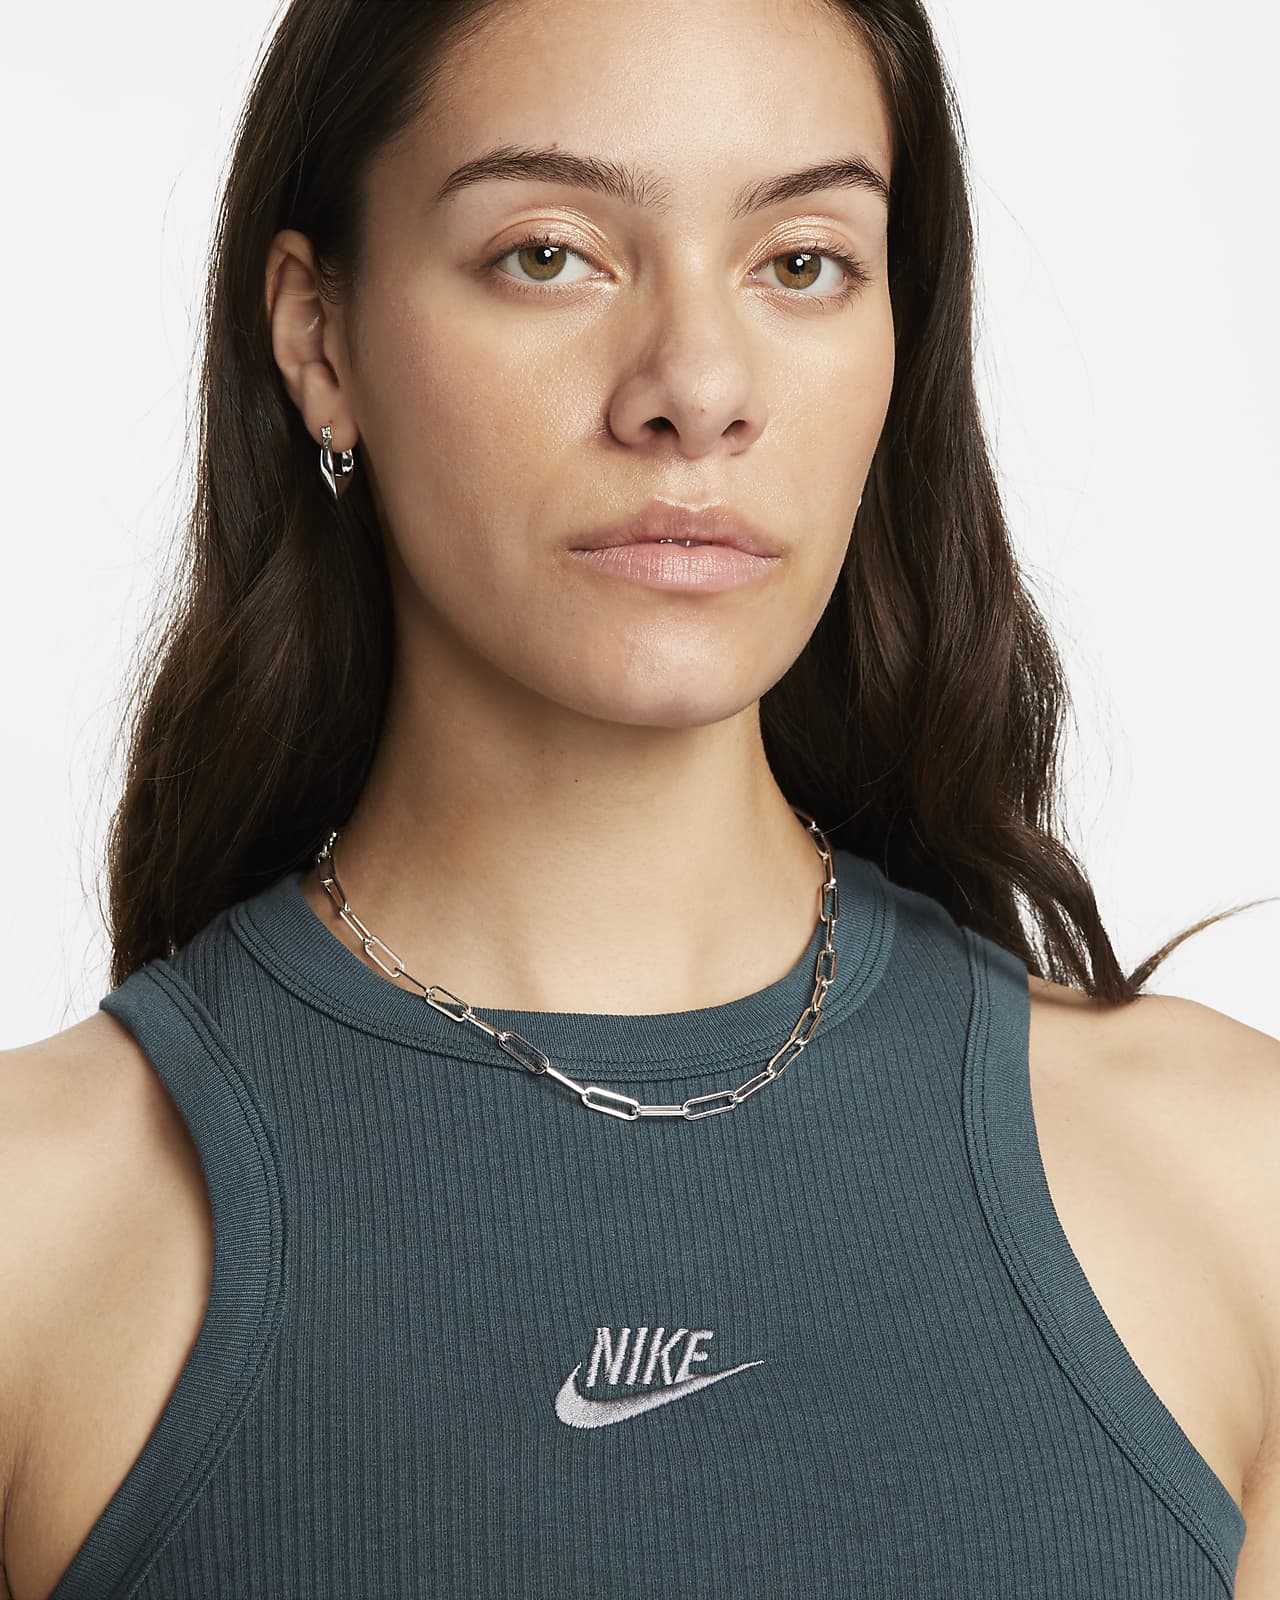 Nike Sportswear Essentials SE Women's Ribbed Cropped Tank.